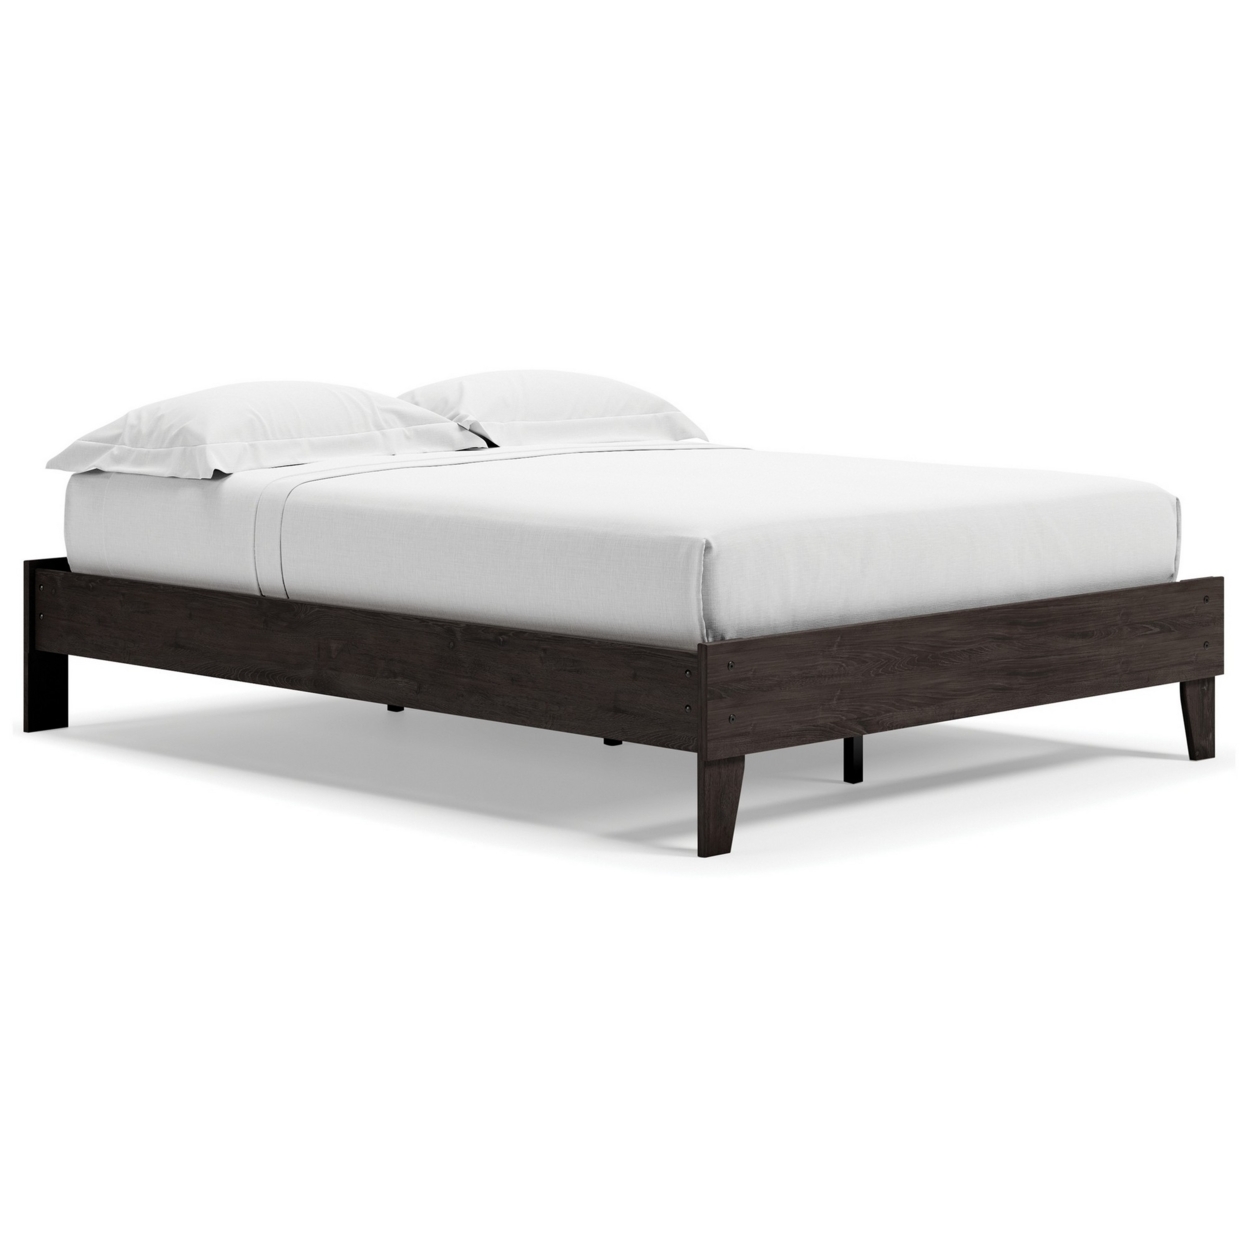 Lass Queen Size Bed, Platform Style, Low Profile Frame, Dark Charcoal Gray- Saltoro Sherpi